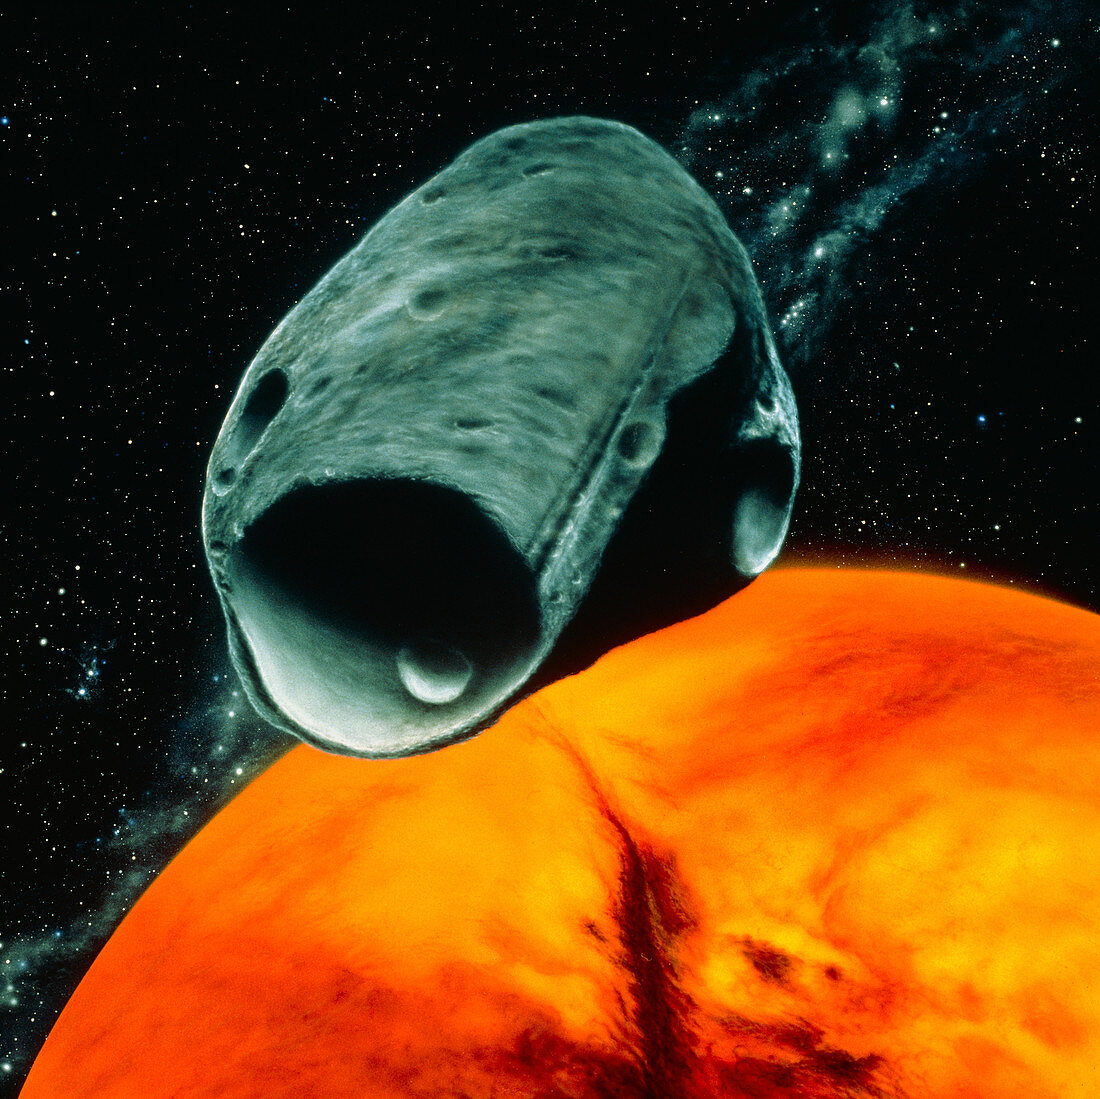 Artist's impression of the Martian moon Phobos